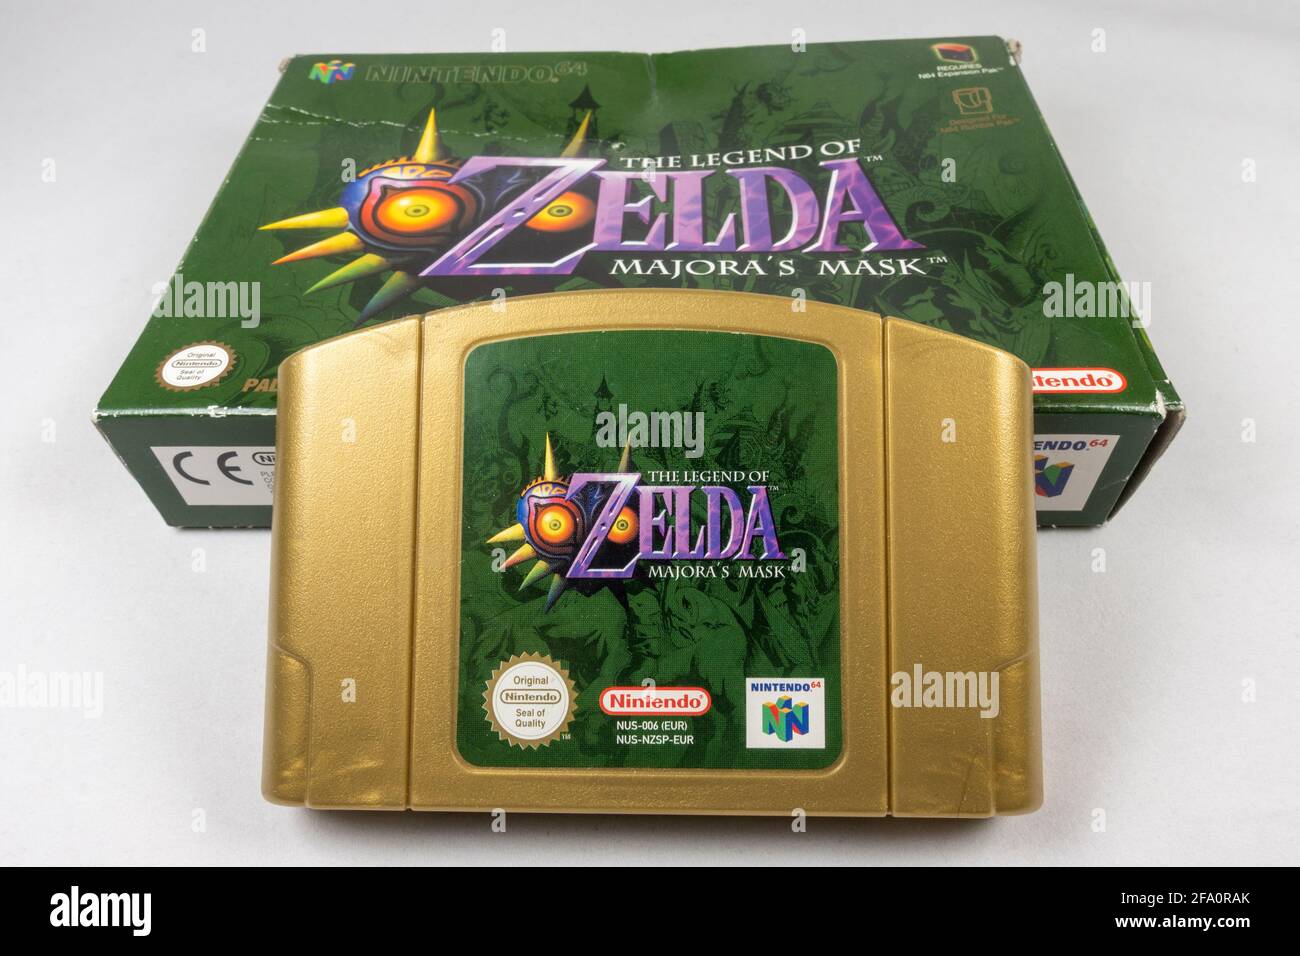 Legend of Zelda, The - Ocarina of Time (USA) Nintendo 64 (N64) ROM Download  - RomUlation